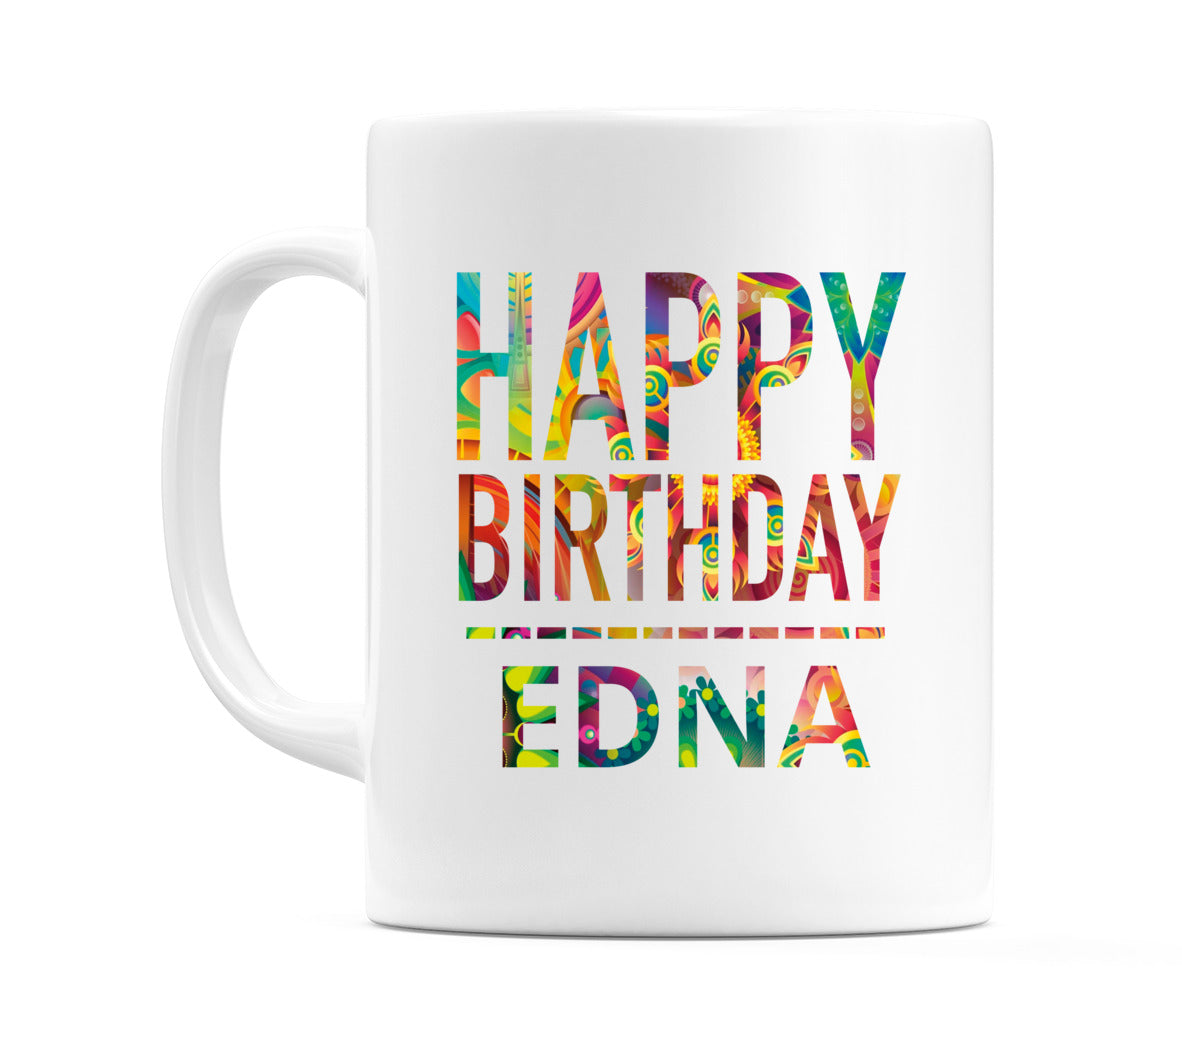 Happy Birthday Edna (Tie Dye Effect) Mug Cup by WeDoMugs